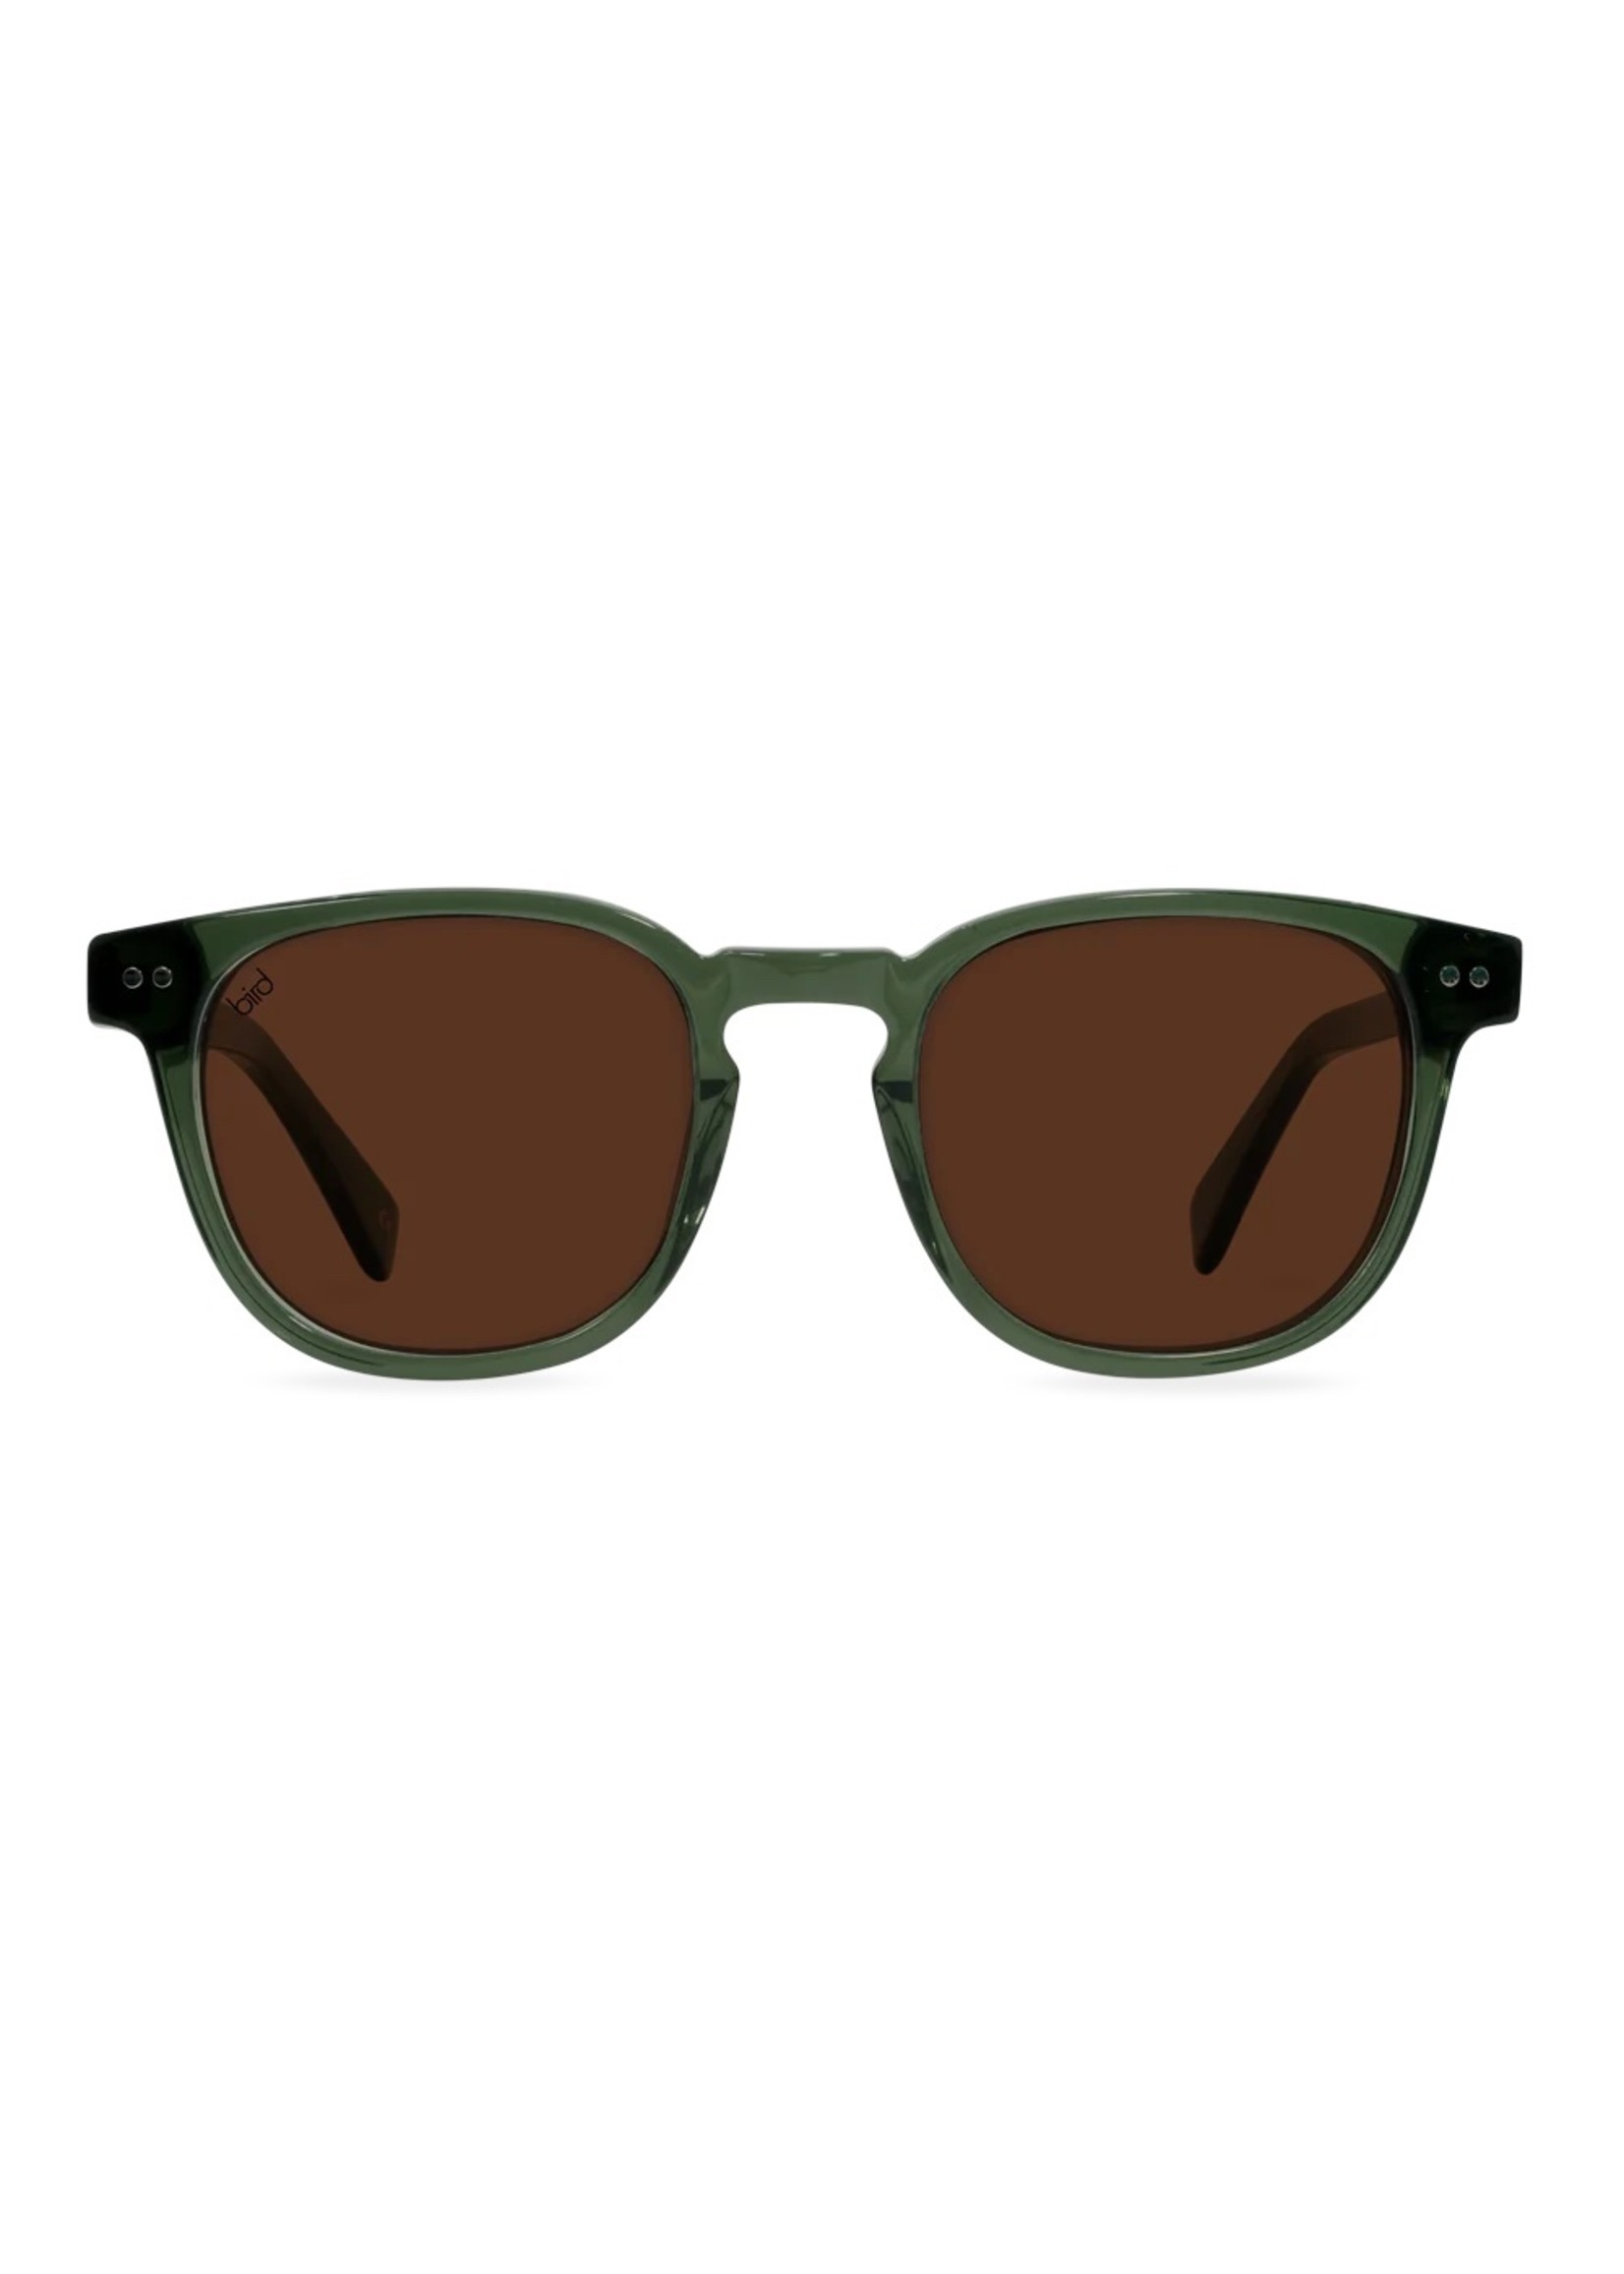 Bird Eyewear Athene Sunglasses - Olive Green